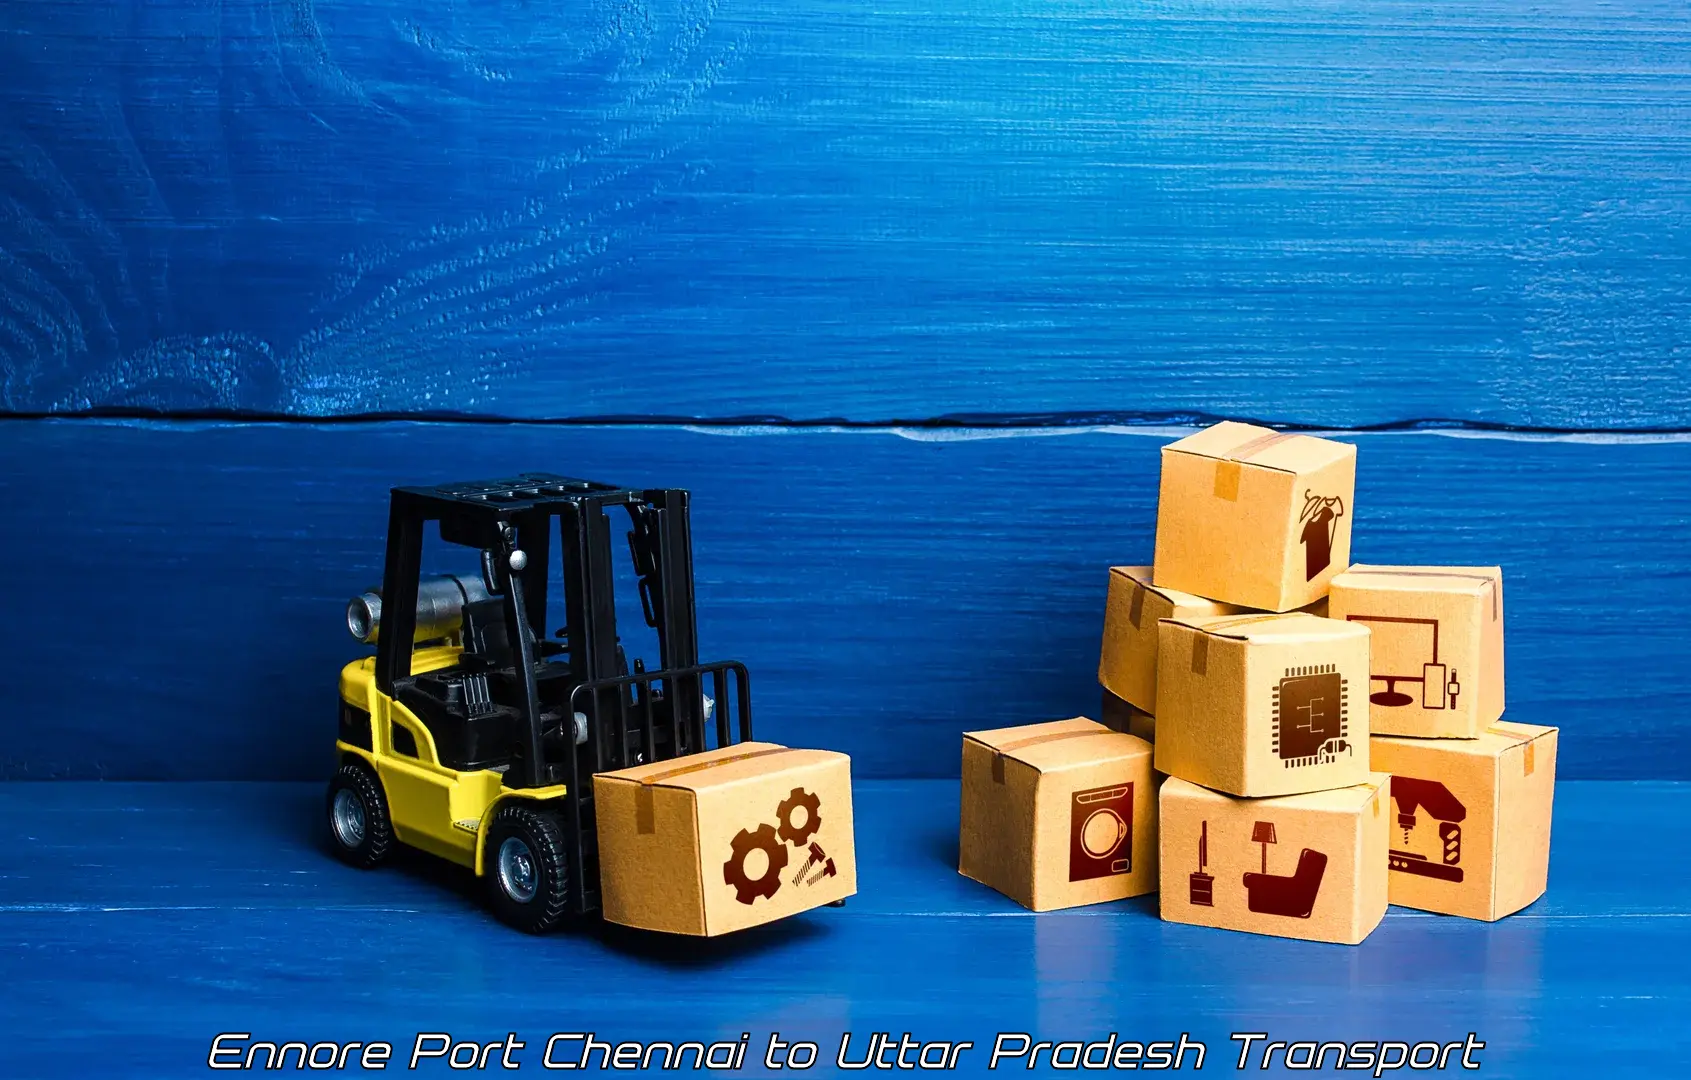 Goods delivery service Ennore Port Chennai to Nanauta